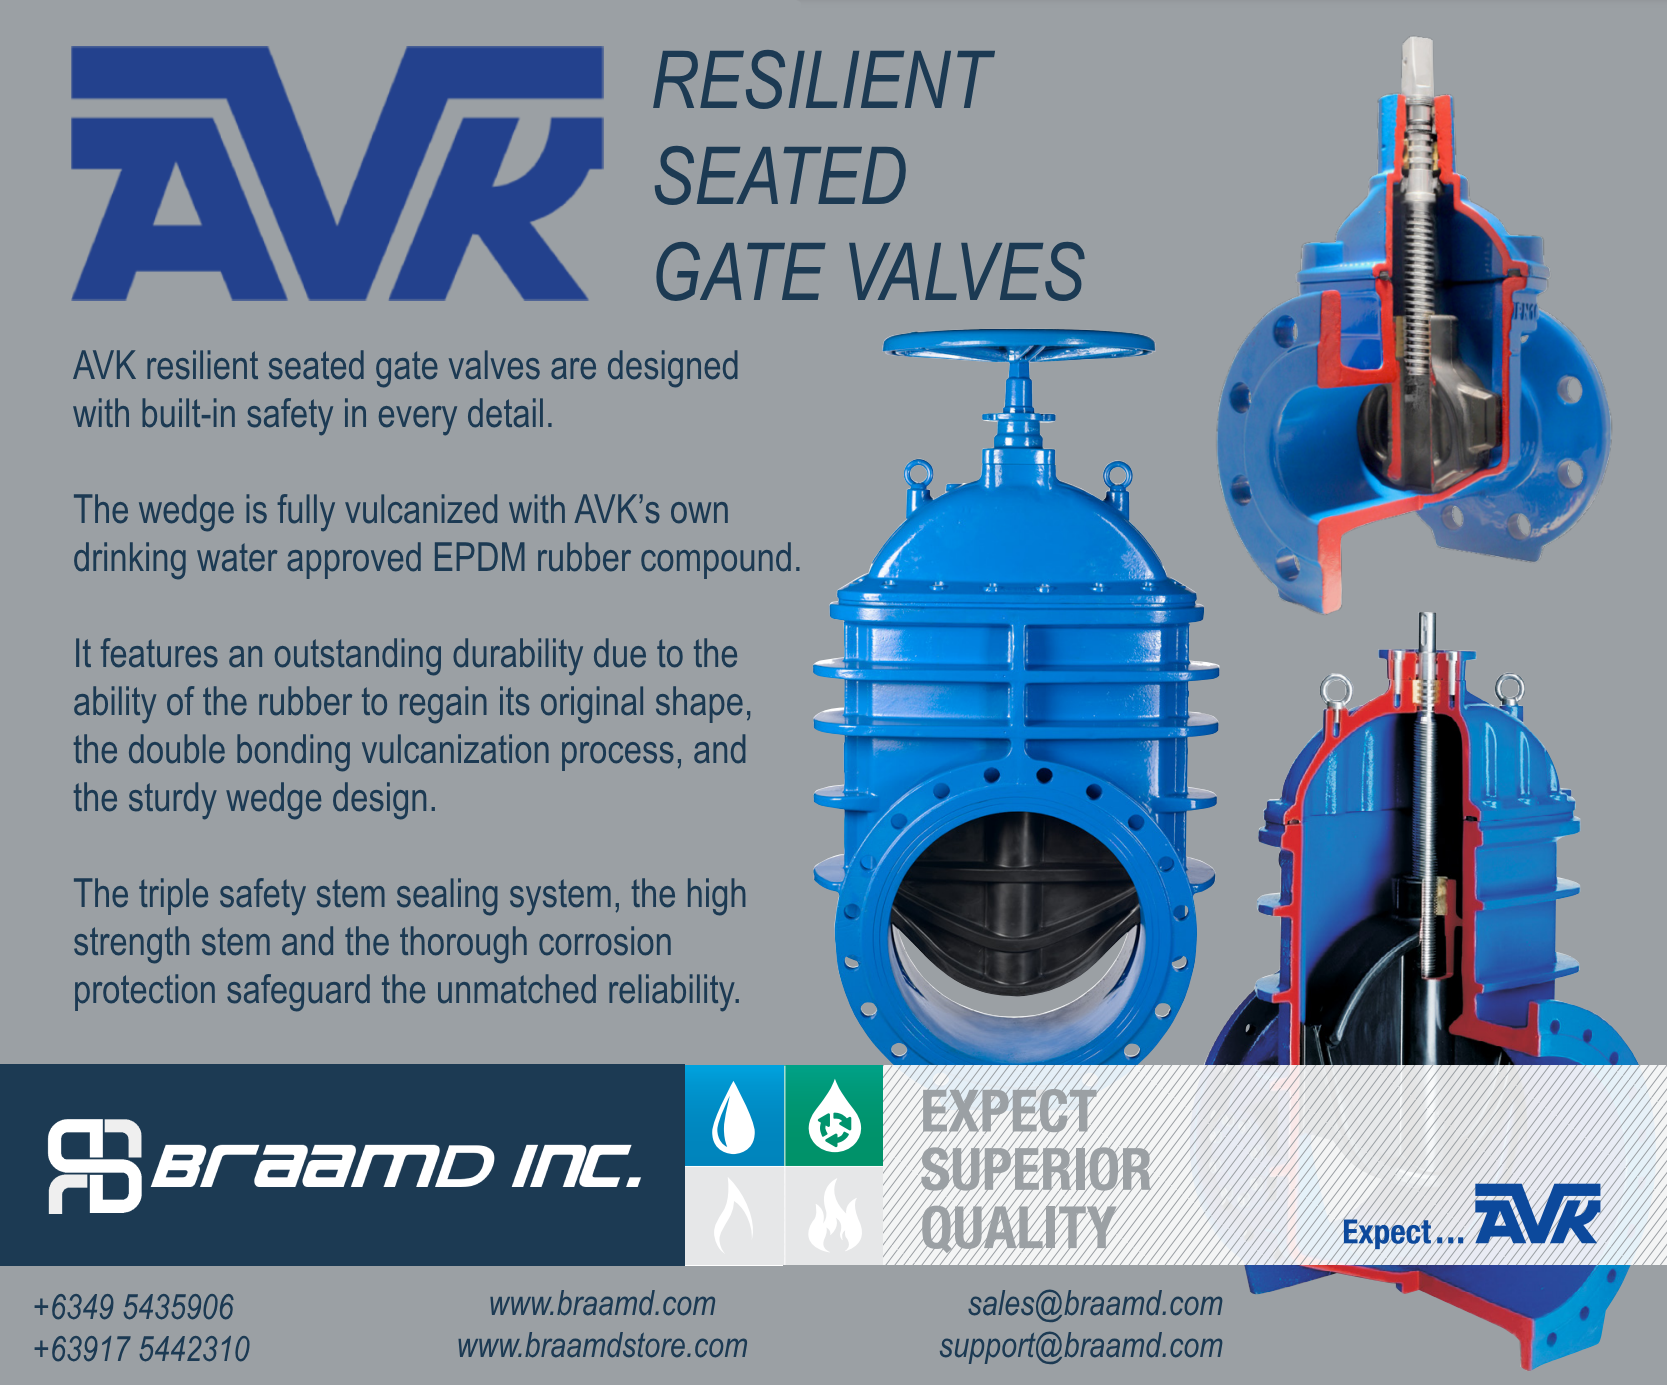 AVK Resilient Seated Gate Valves